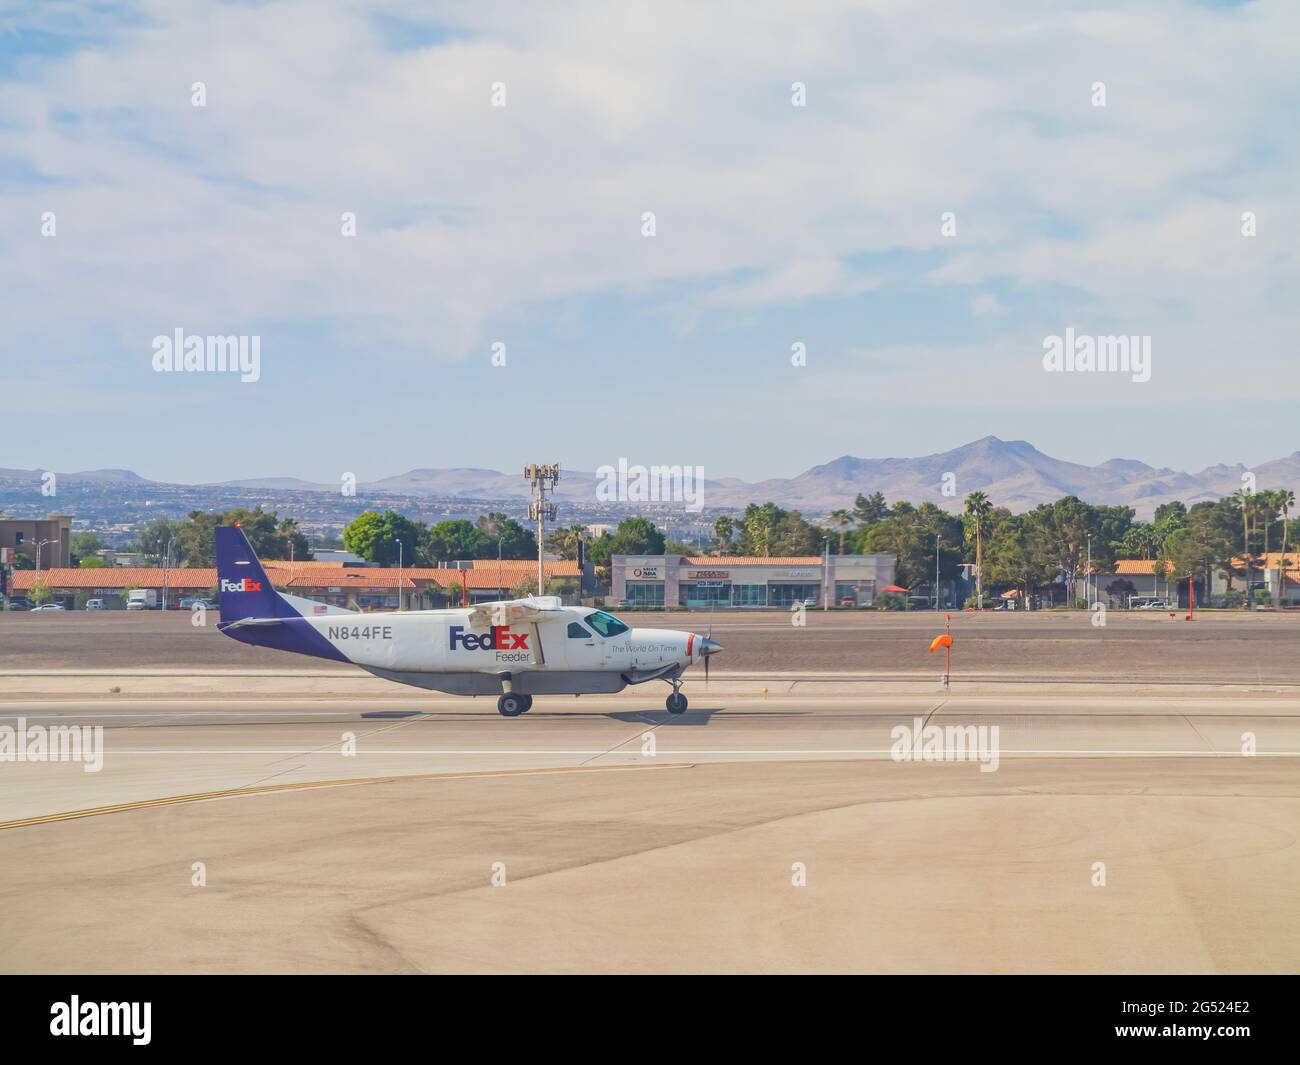 Las Vegas, MAY 19, 2021 - Fedex airplane is ready to take off Stock Photo